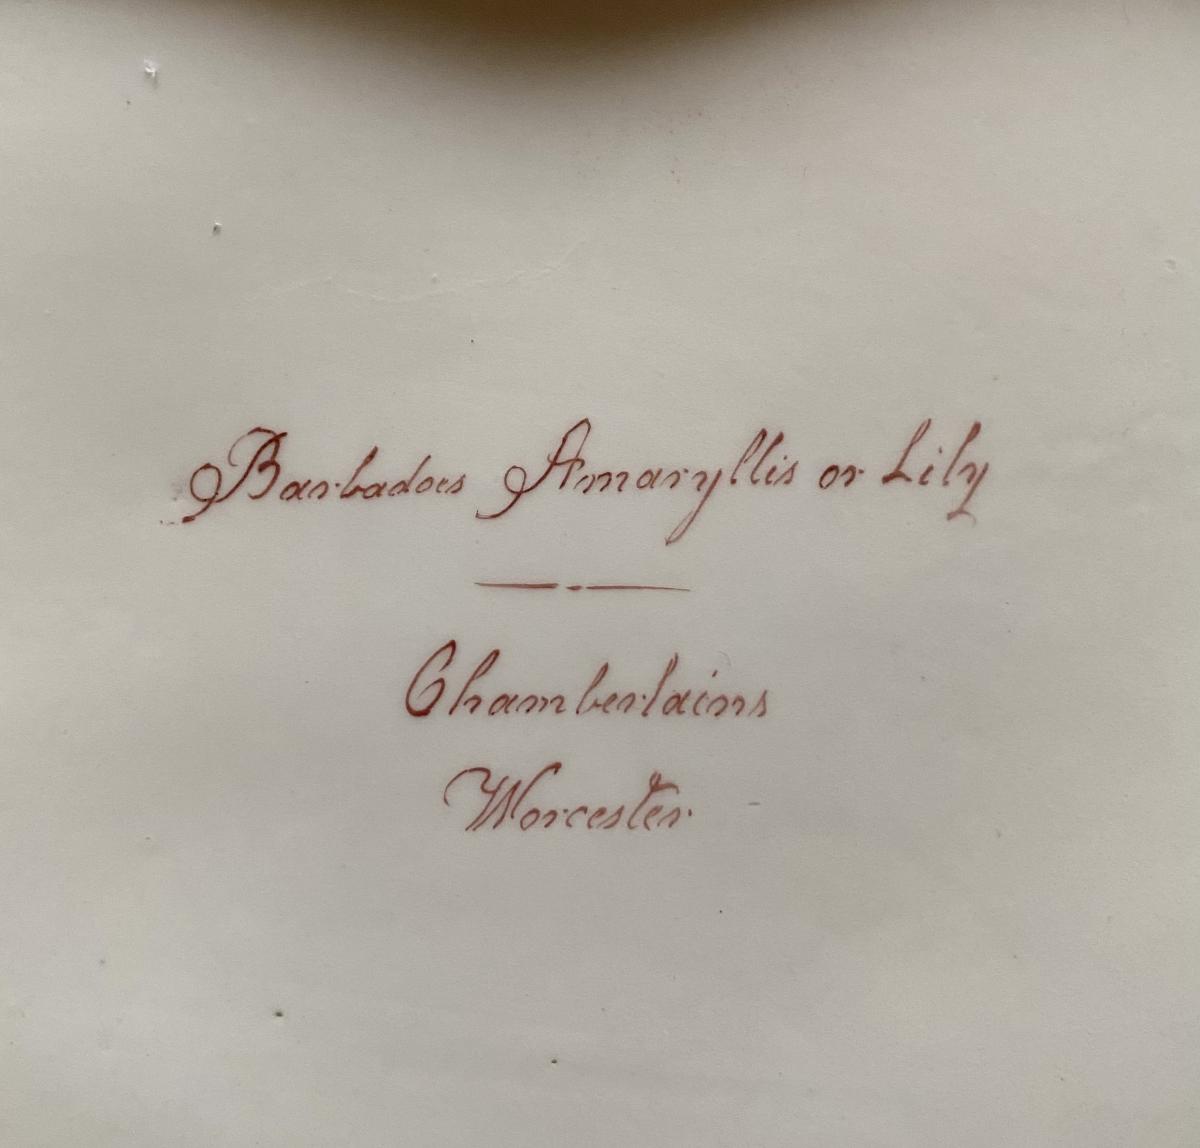 Chamberlains Worcester botanical dish ‘Amaryllis’, circa 1810